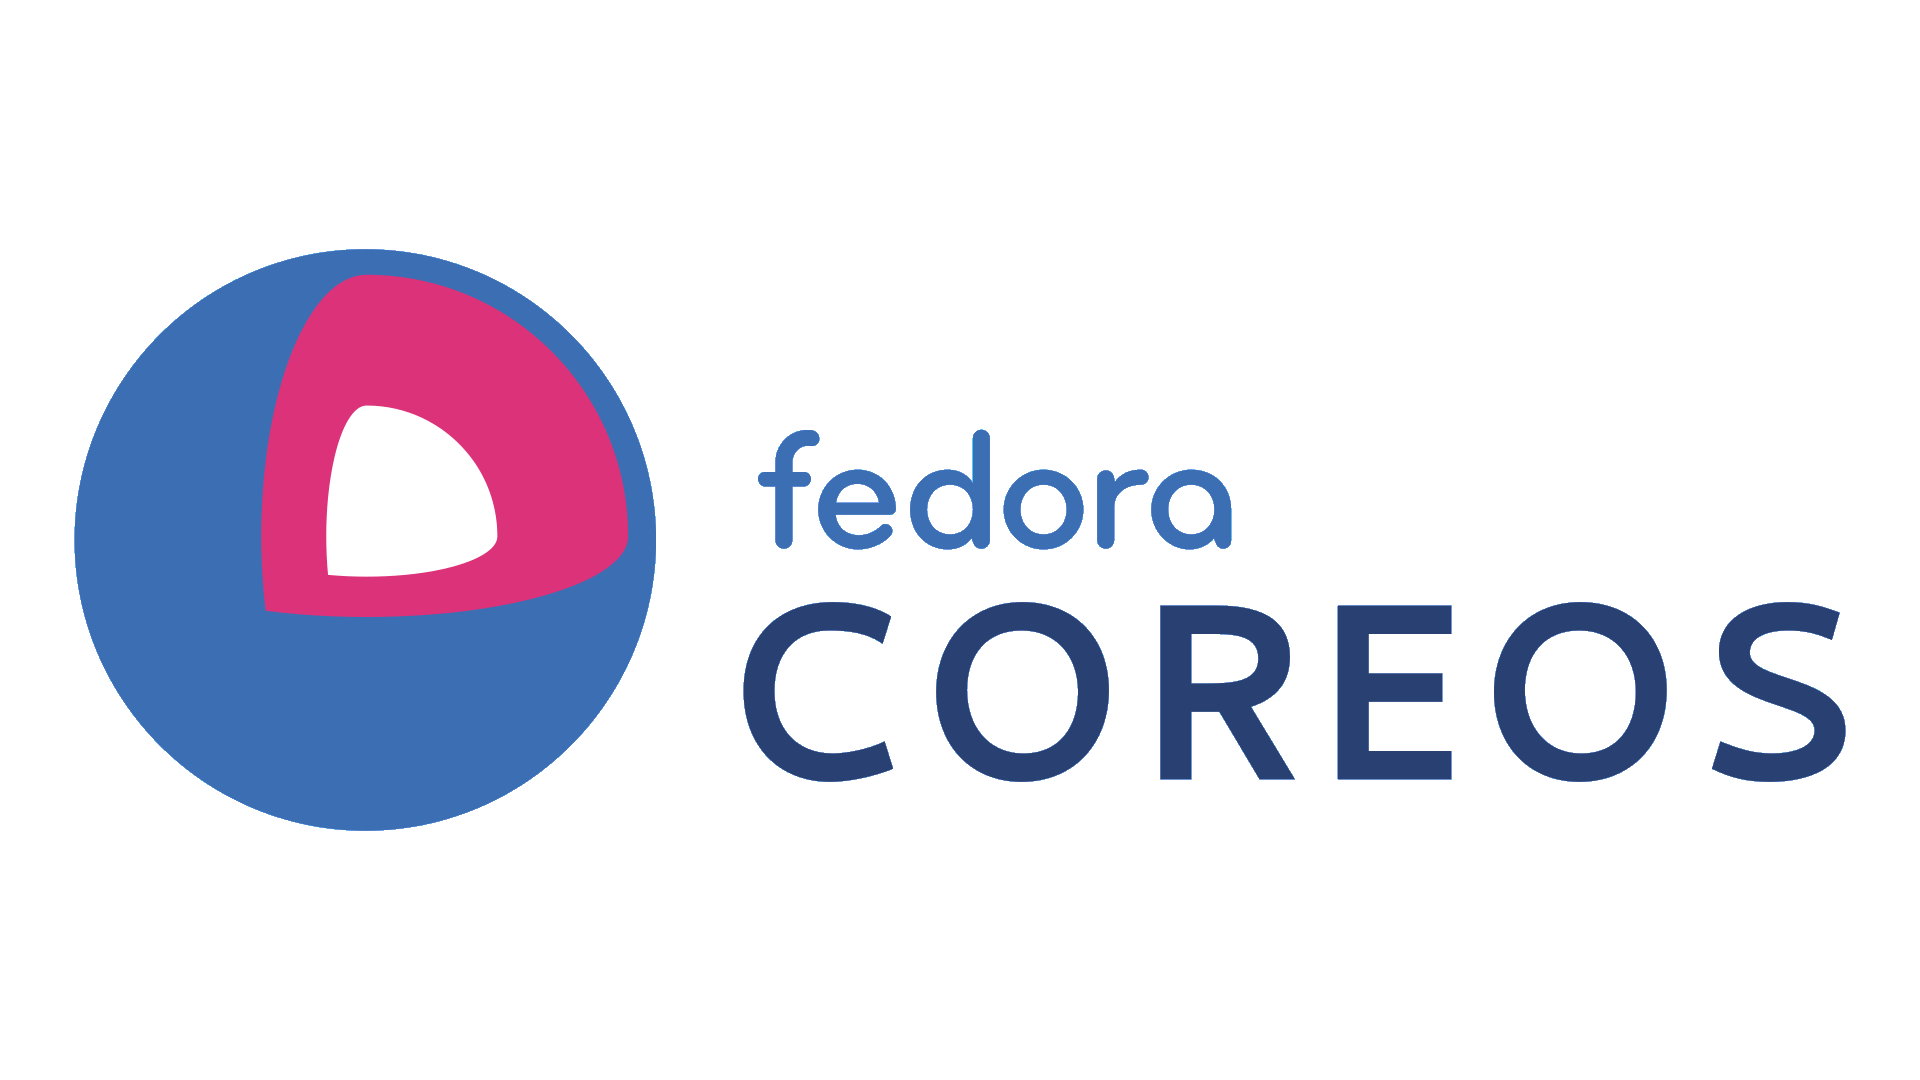 Installation of Fedora CoreOS on Bare metal